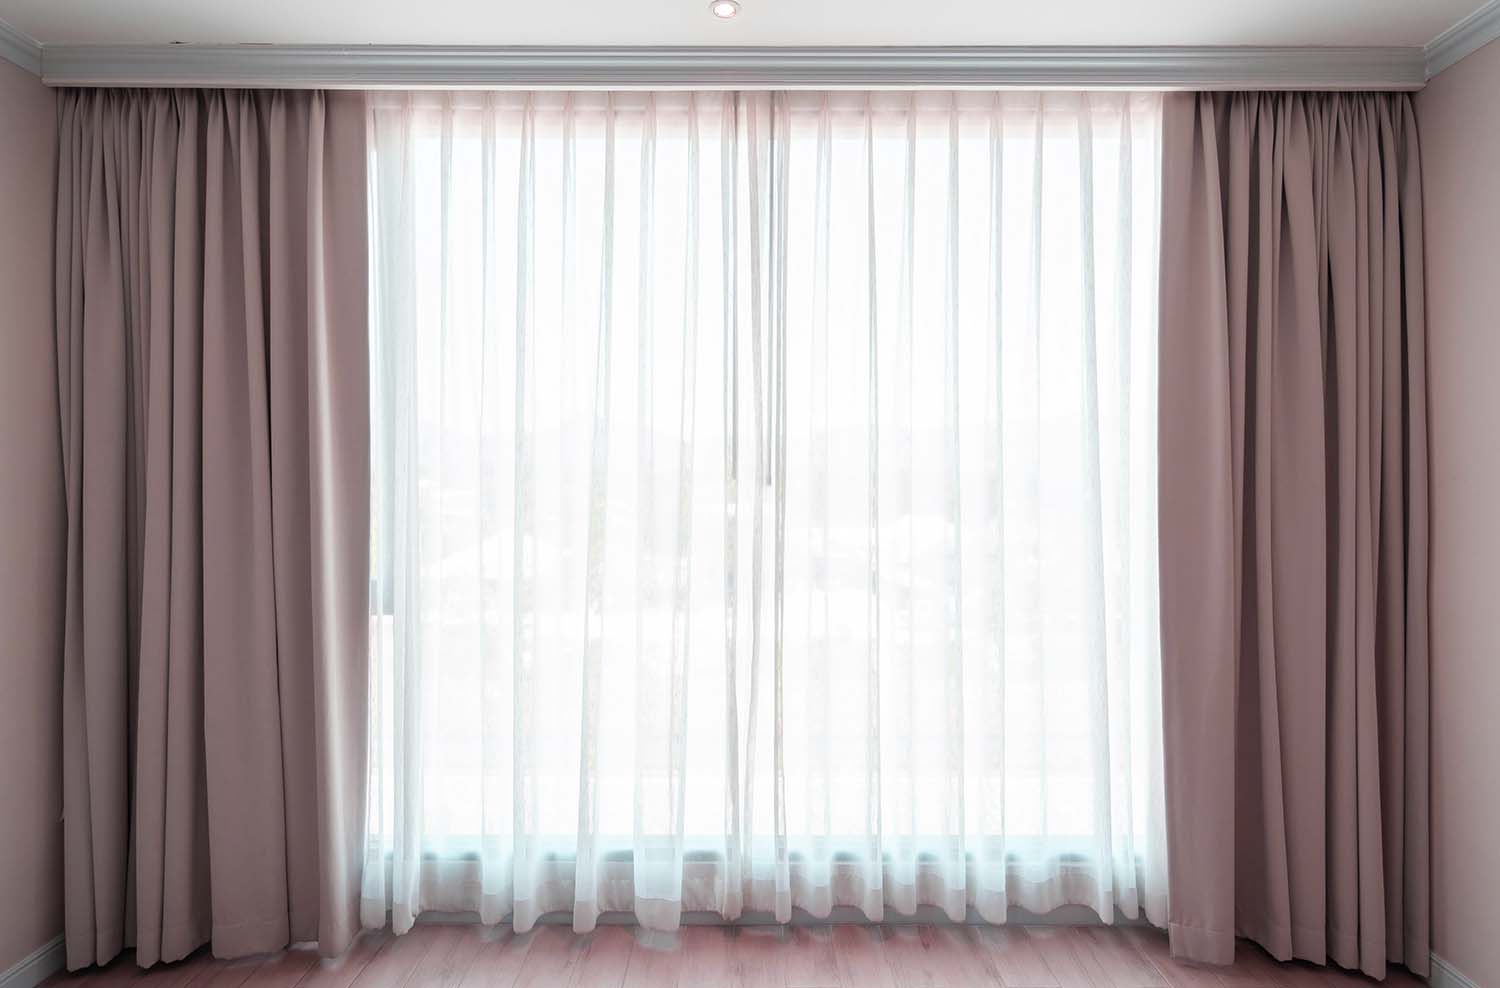 Curtain shop in trivandrum - Big window curtains